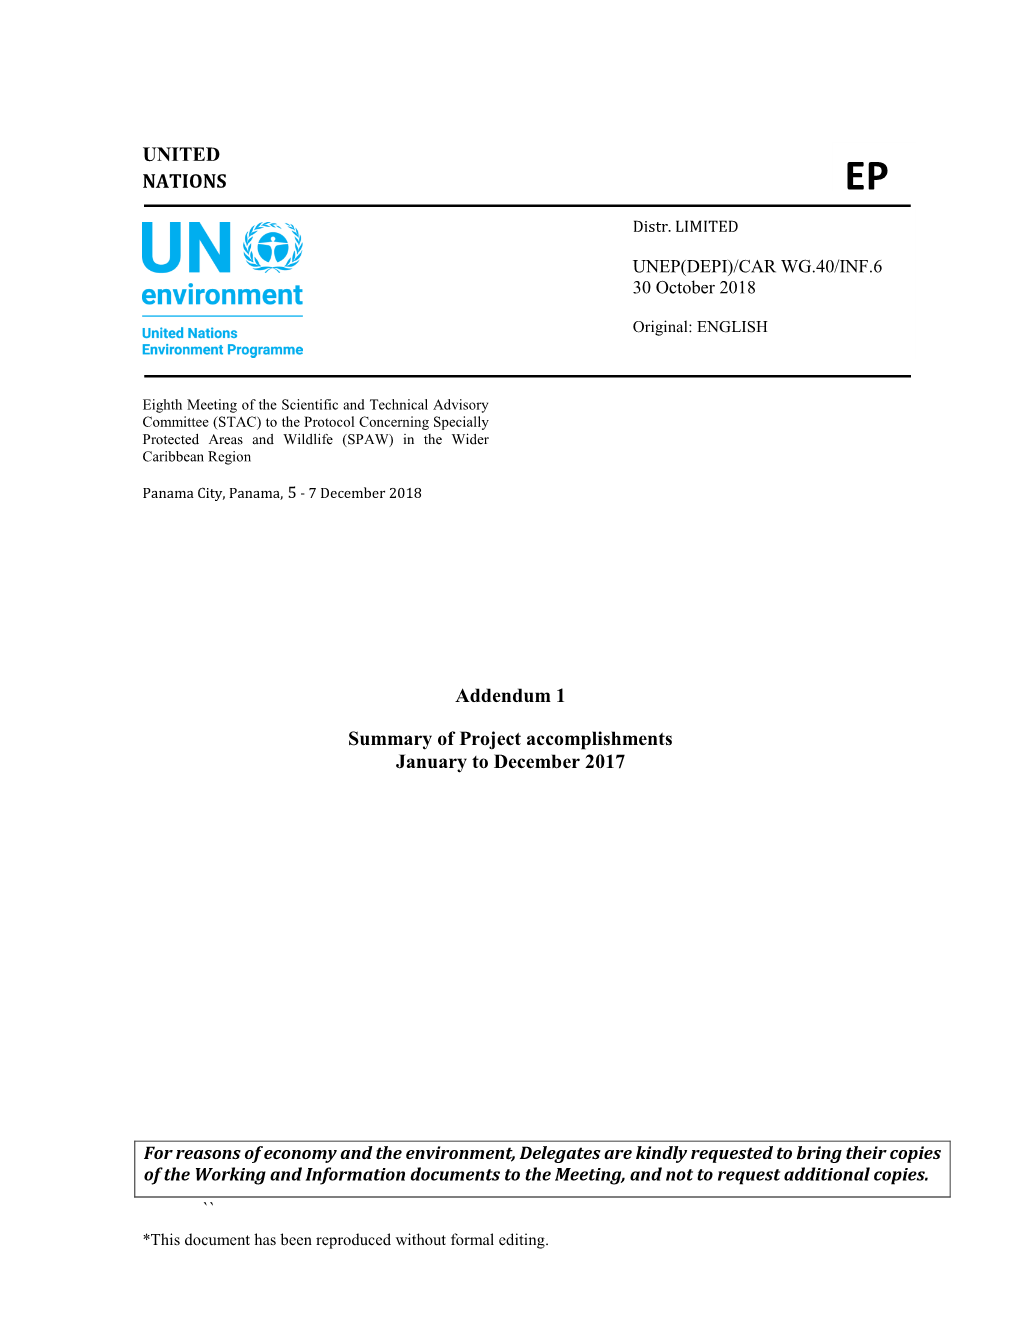 UNITED NATIONS Addendum 1 Summary of Project Accomplishments January to December 2017